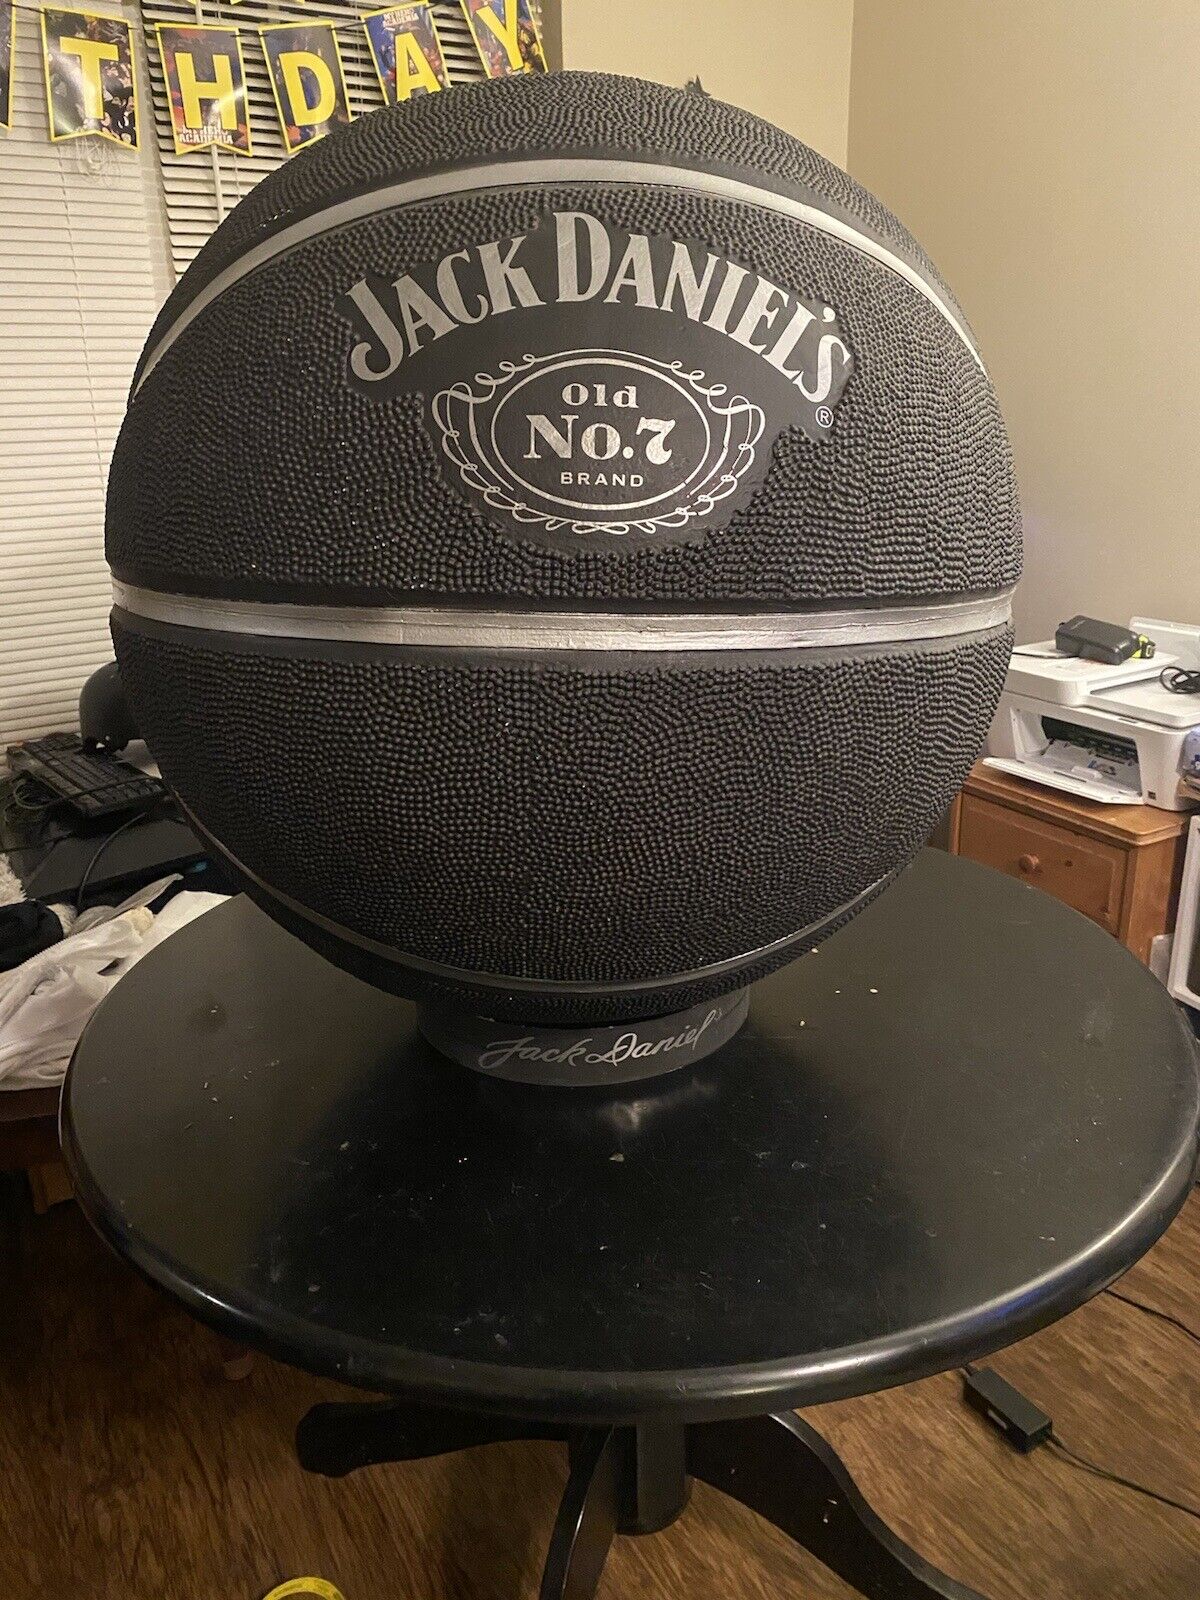 Jack Daniels Basketball Promotional Display